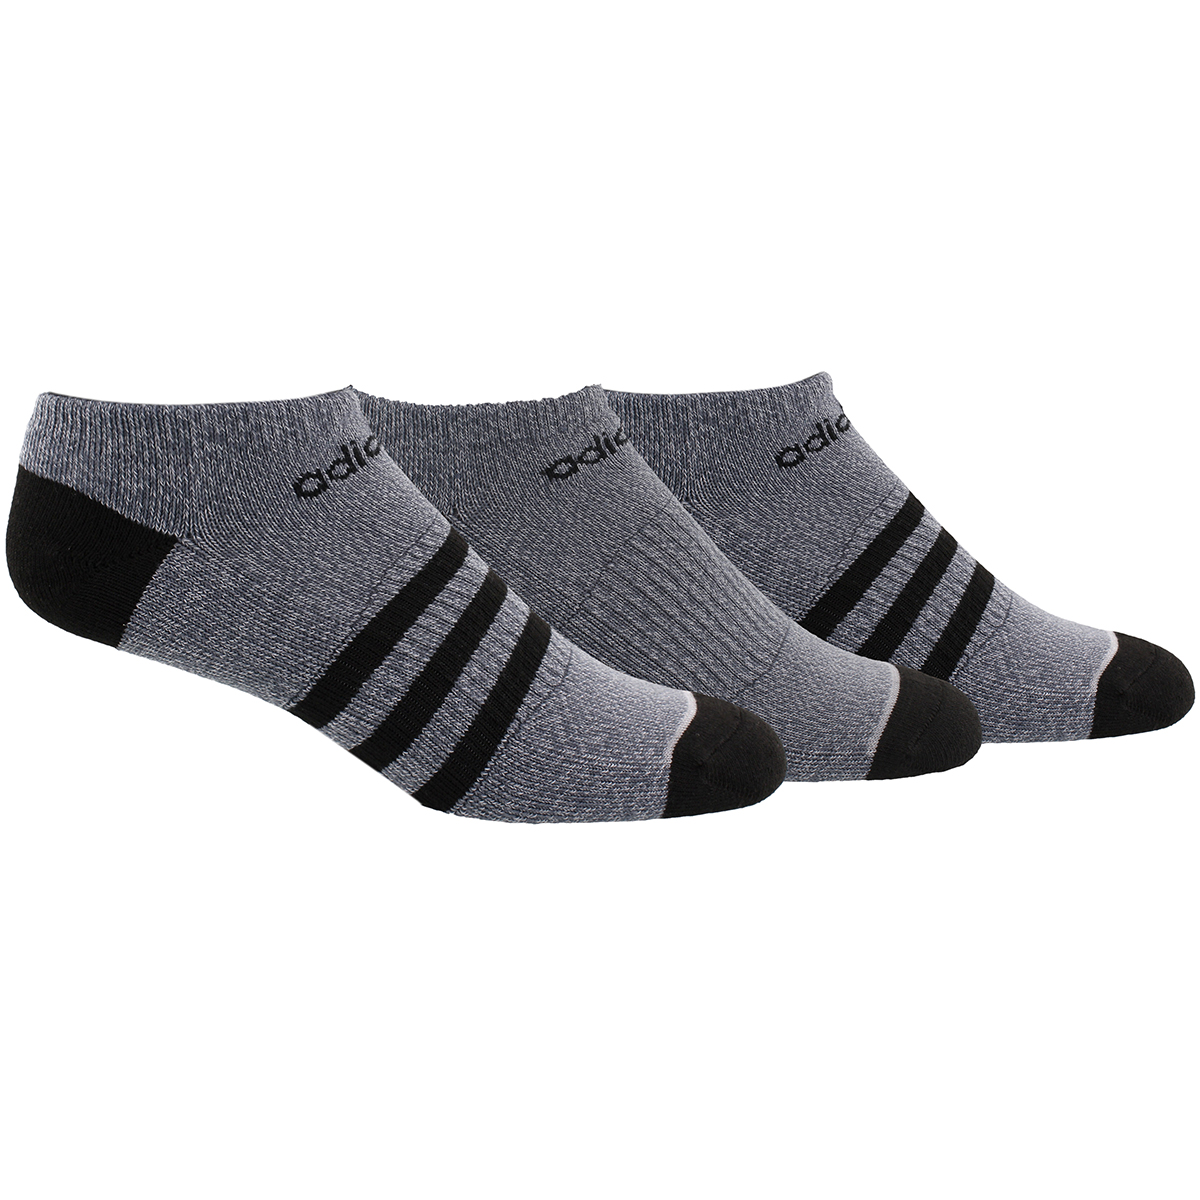 Adidas Men's Climacool Superlite Stripe No-Show Socks, 3-Pack